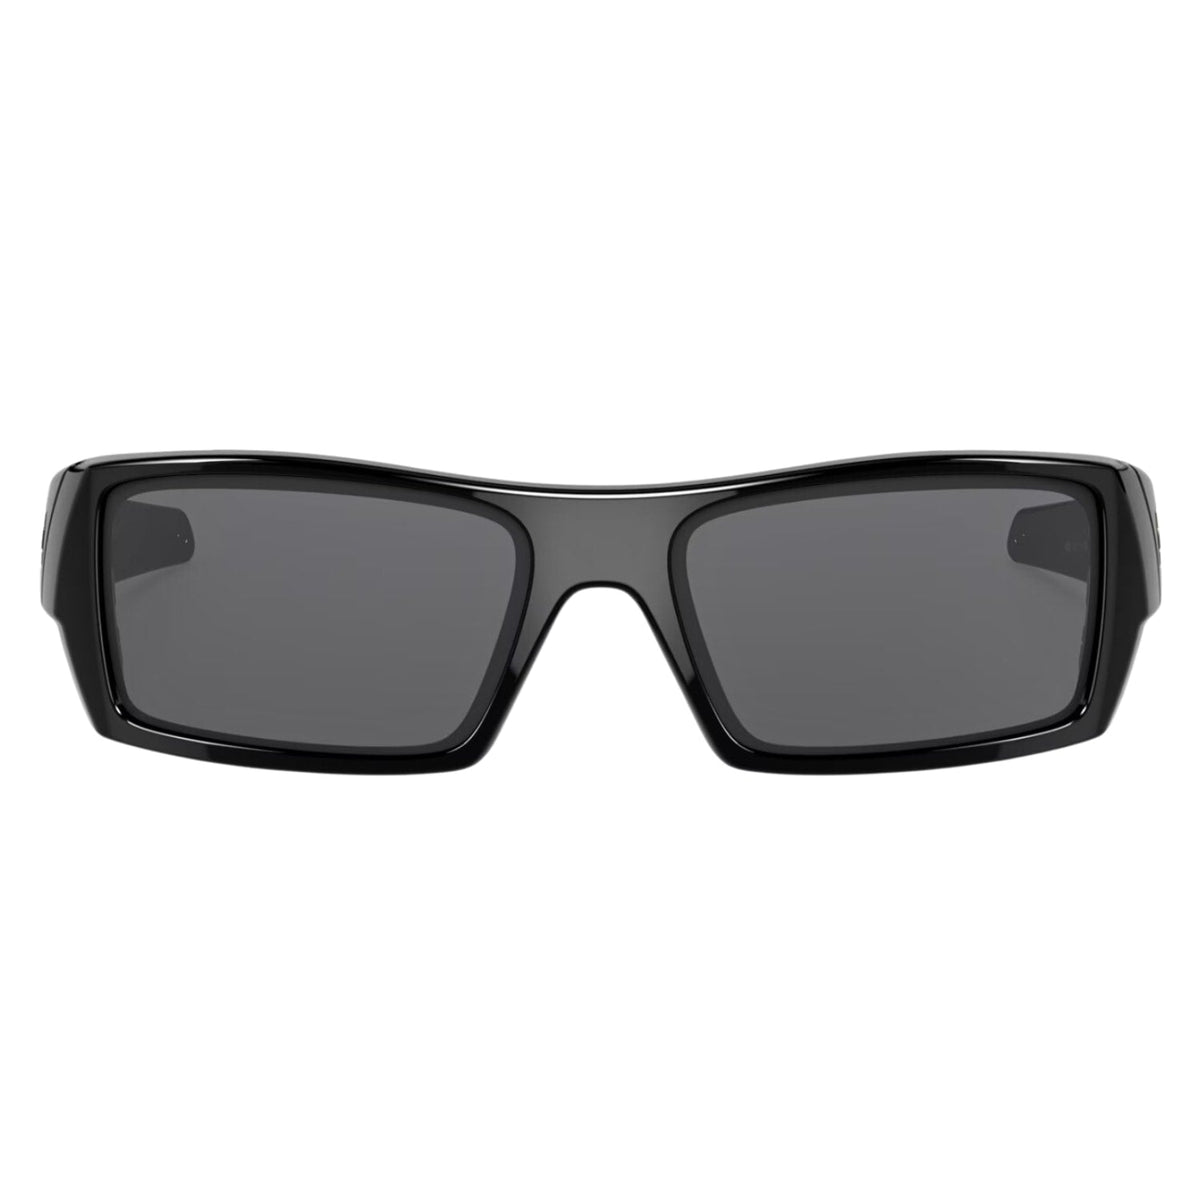 Oakley Gascan Sunglasses - Polished Black/Grey